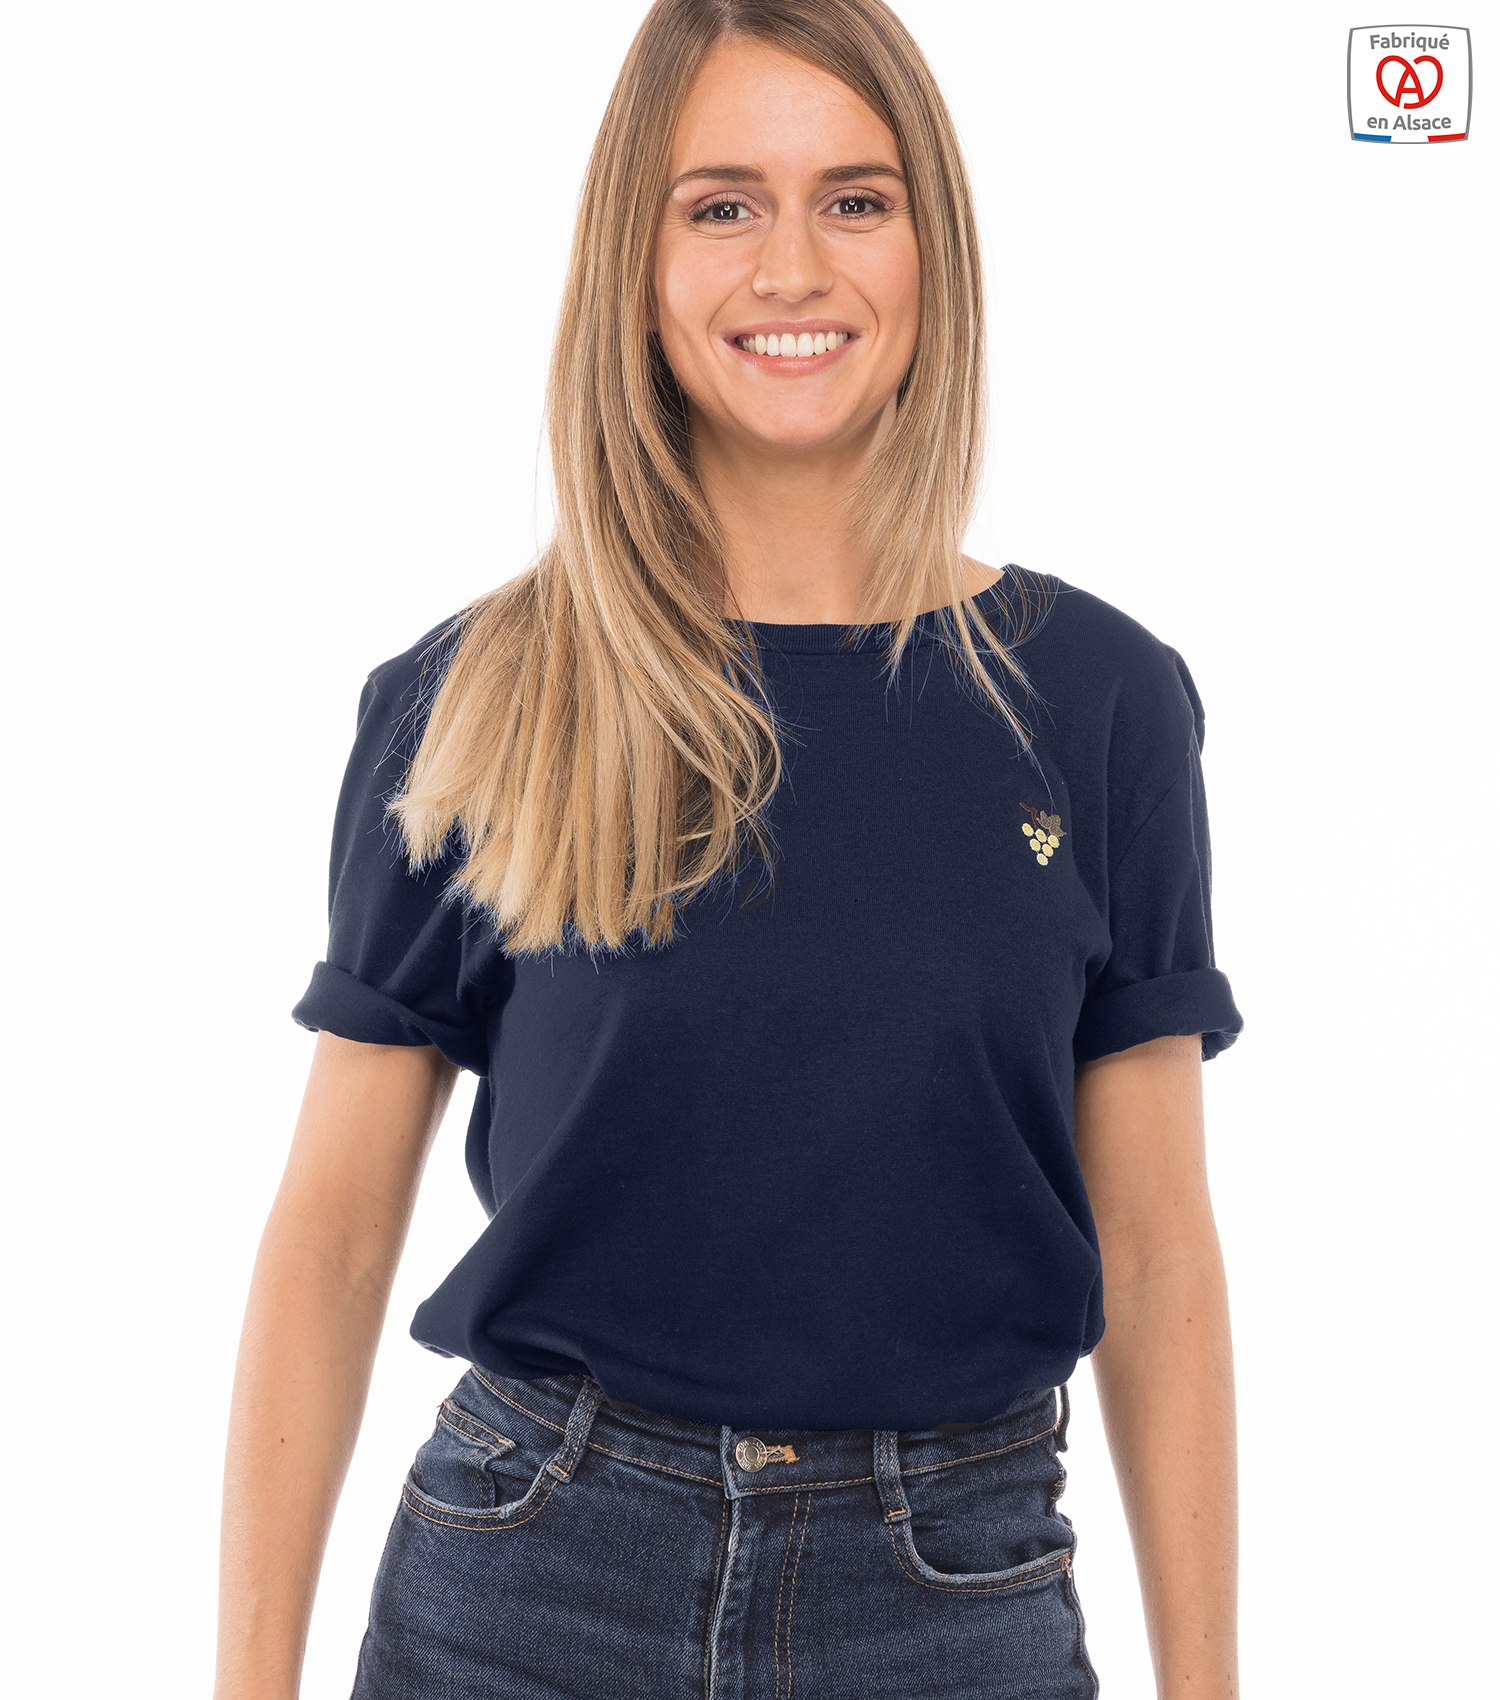 theim-t-shirt-made-in-france-mixte-bleu-marine-raisin-femme-1500-x-1700-px